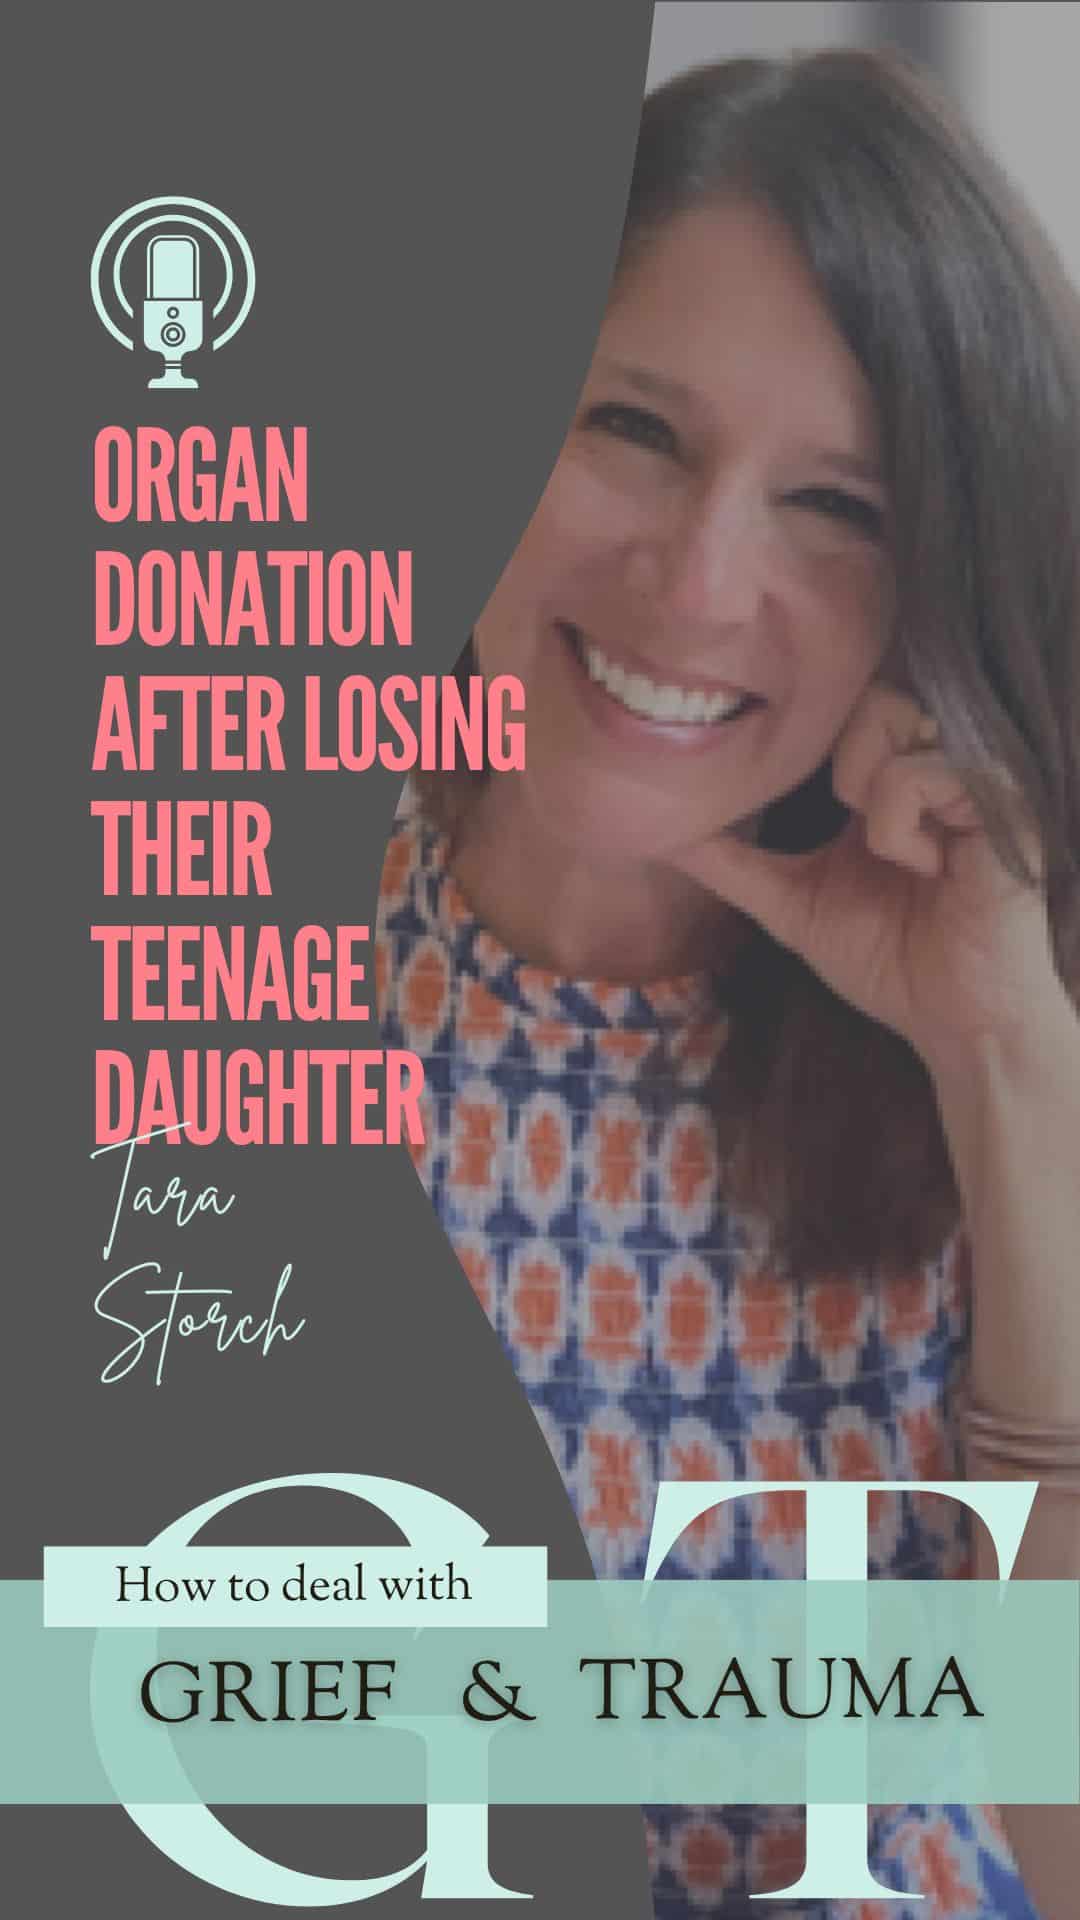 47 Tara Storch on Organ Donation After Losing Their Teenage Daughter